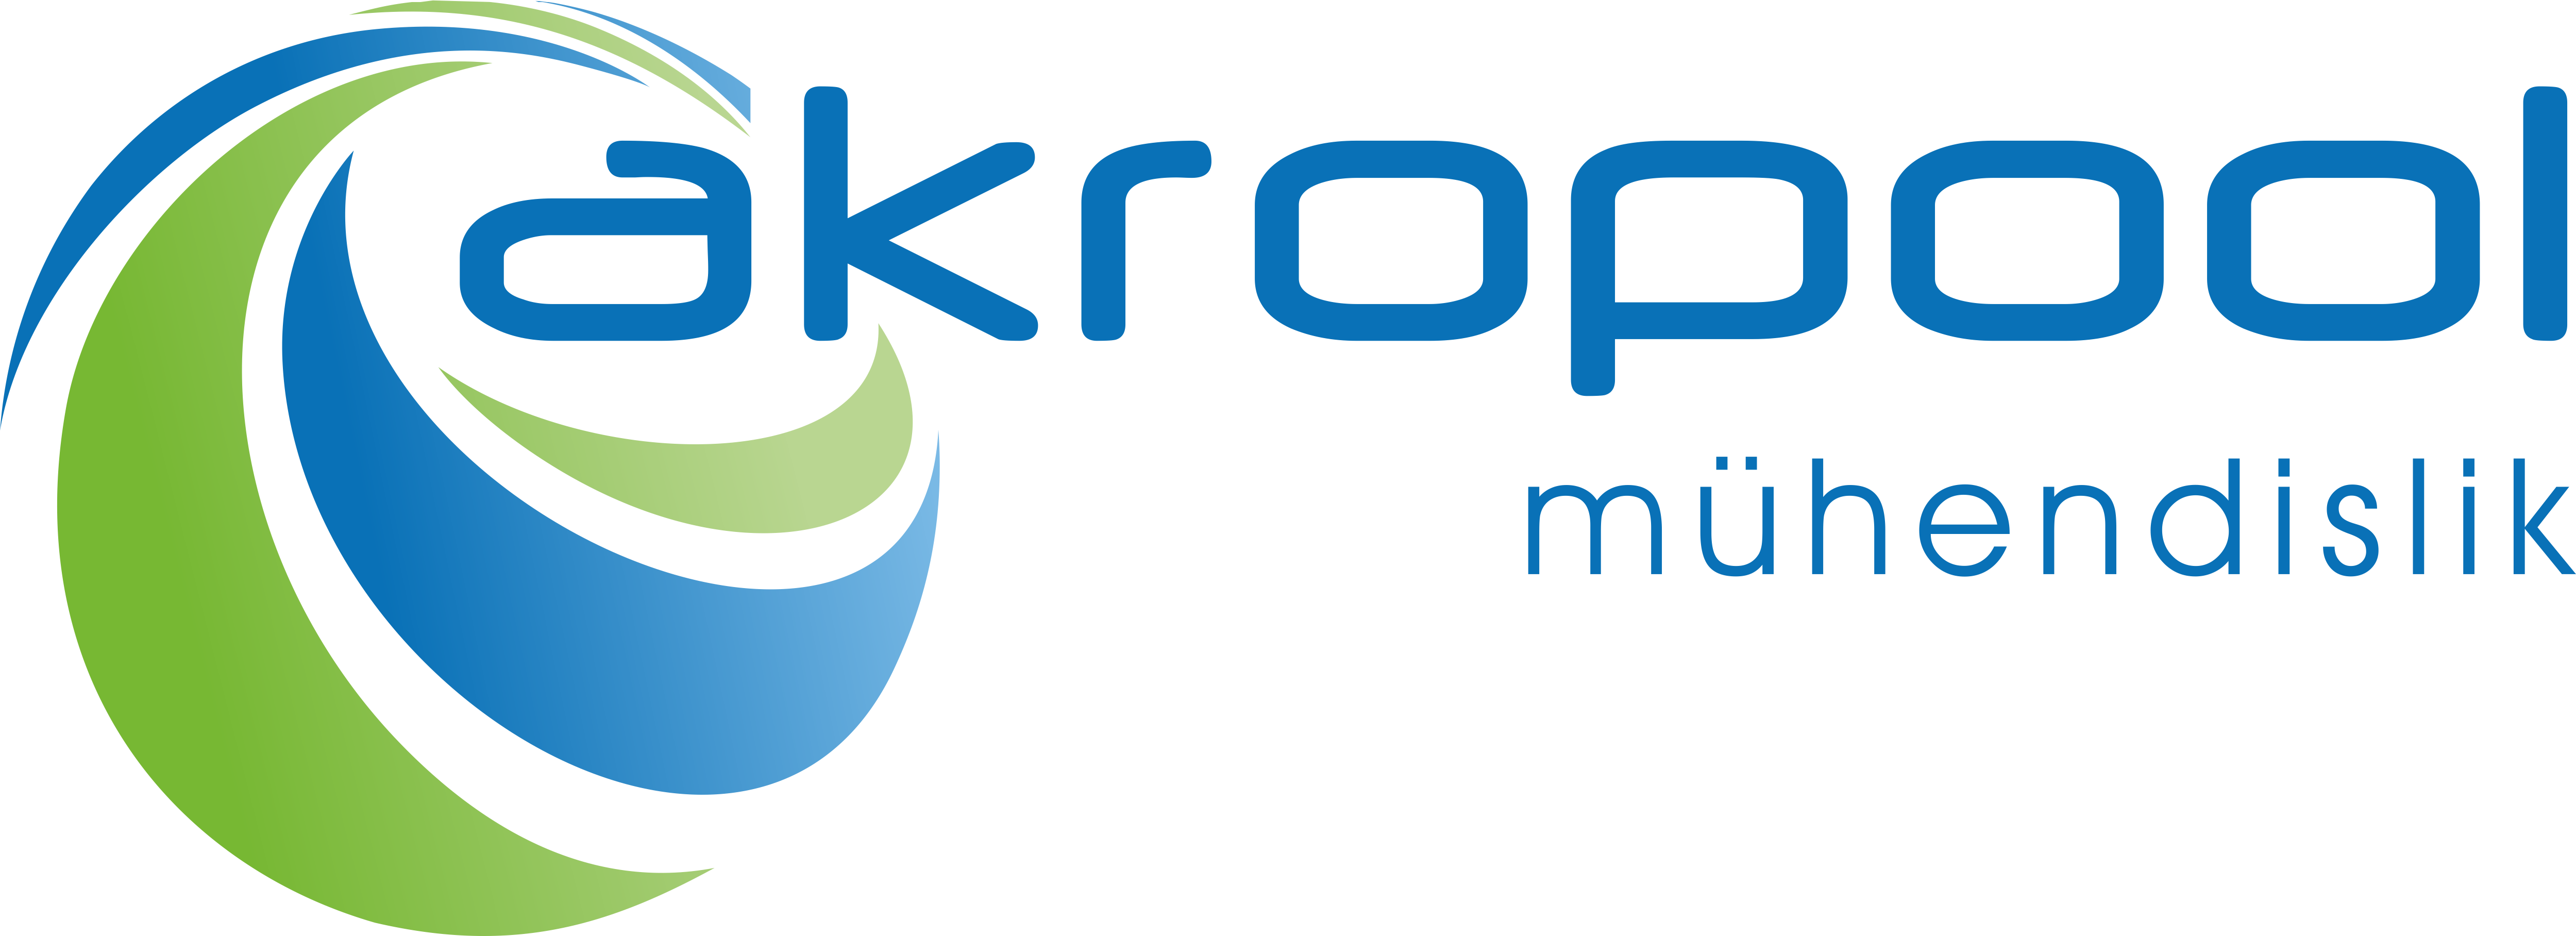 Akropool